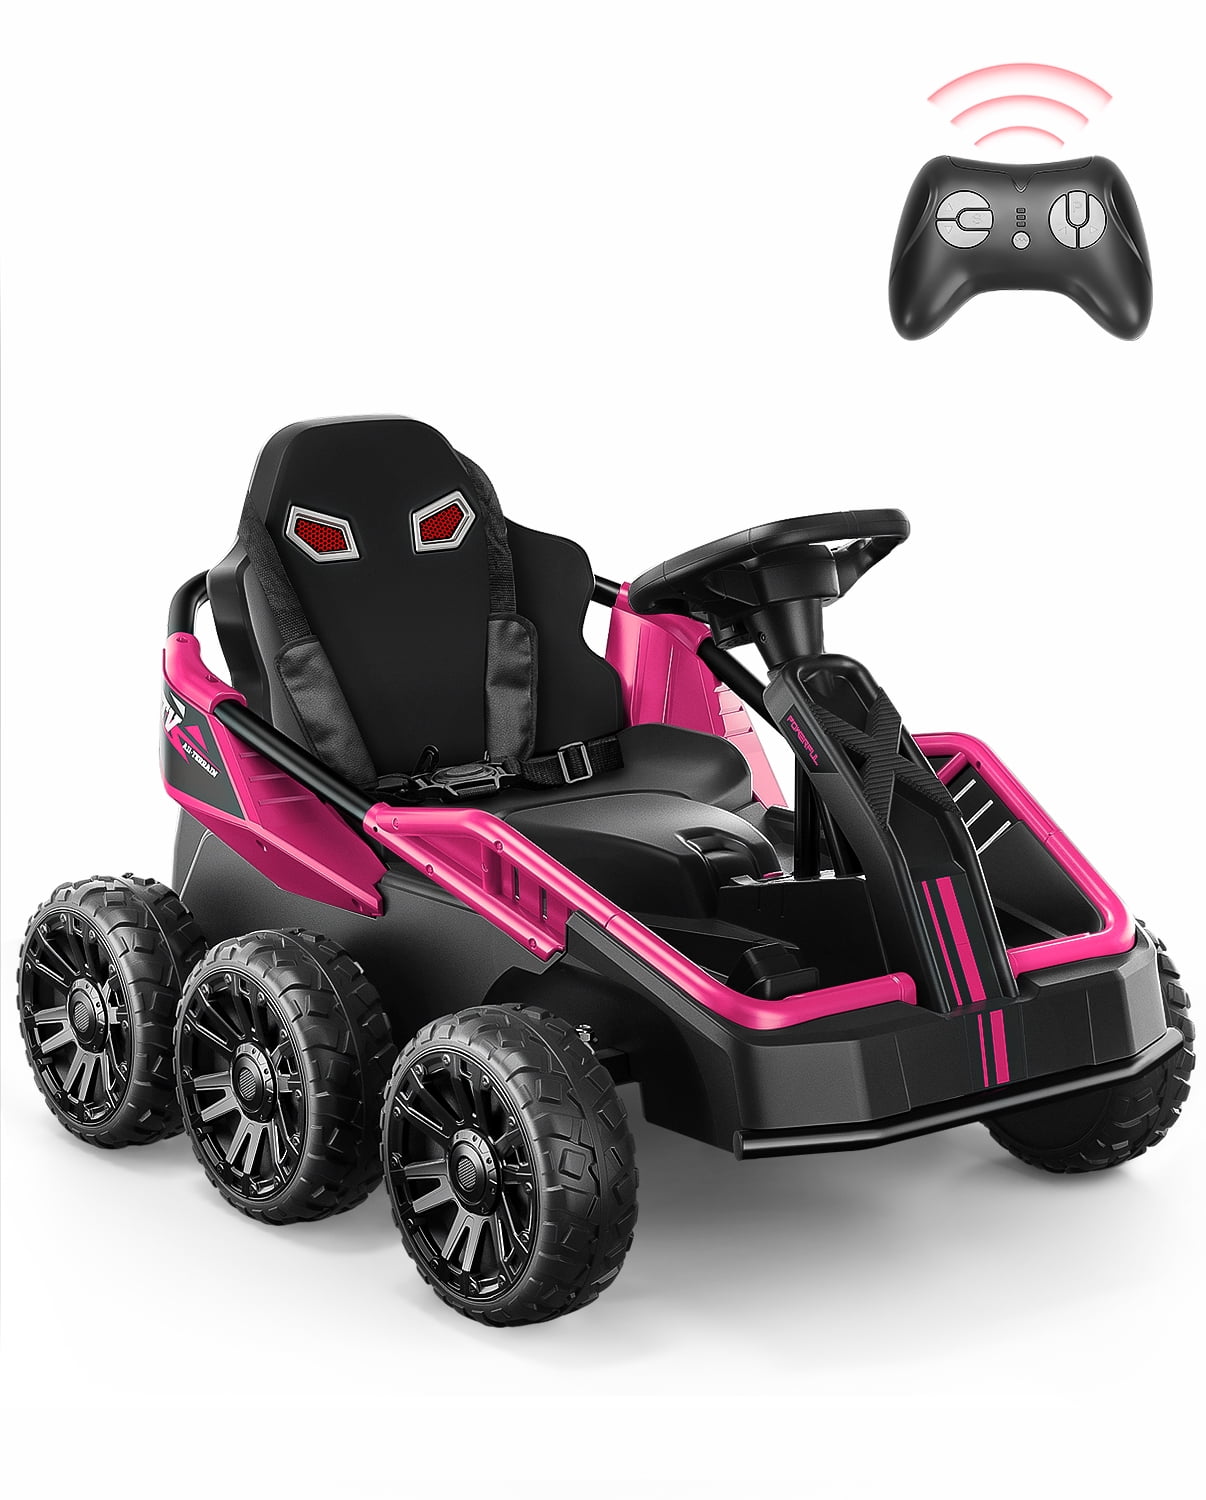 KIDSCLEANCAR: Portable Go Kart, Ride On Race Car, Shopify Store Listing